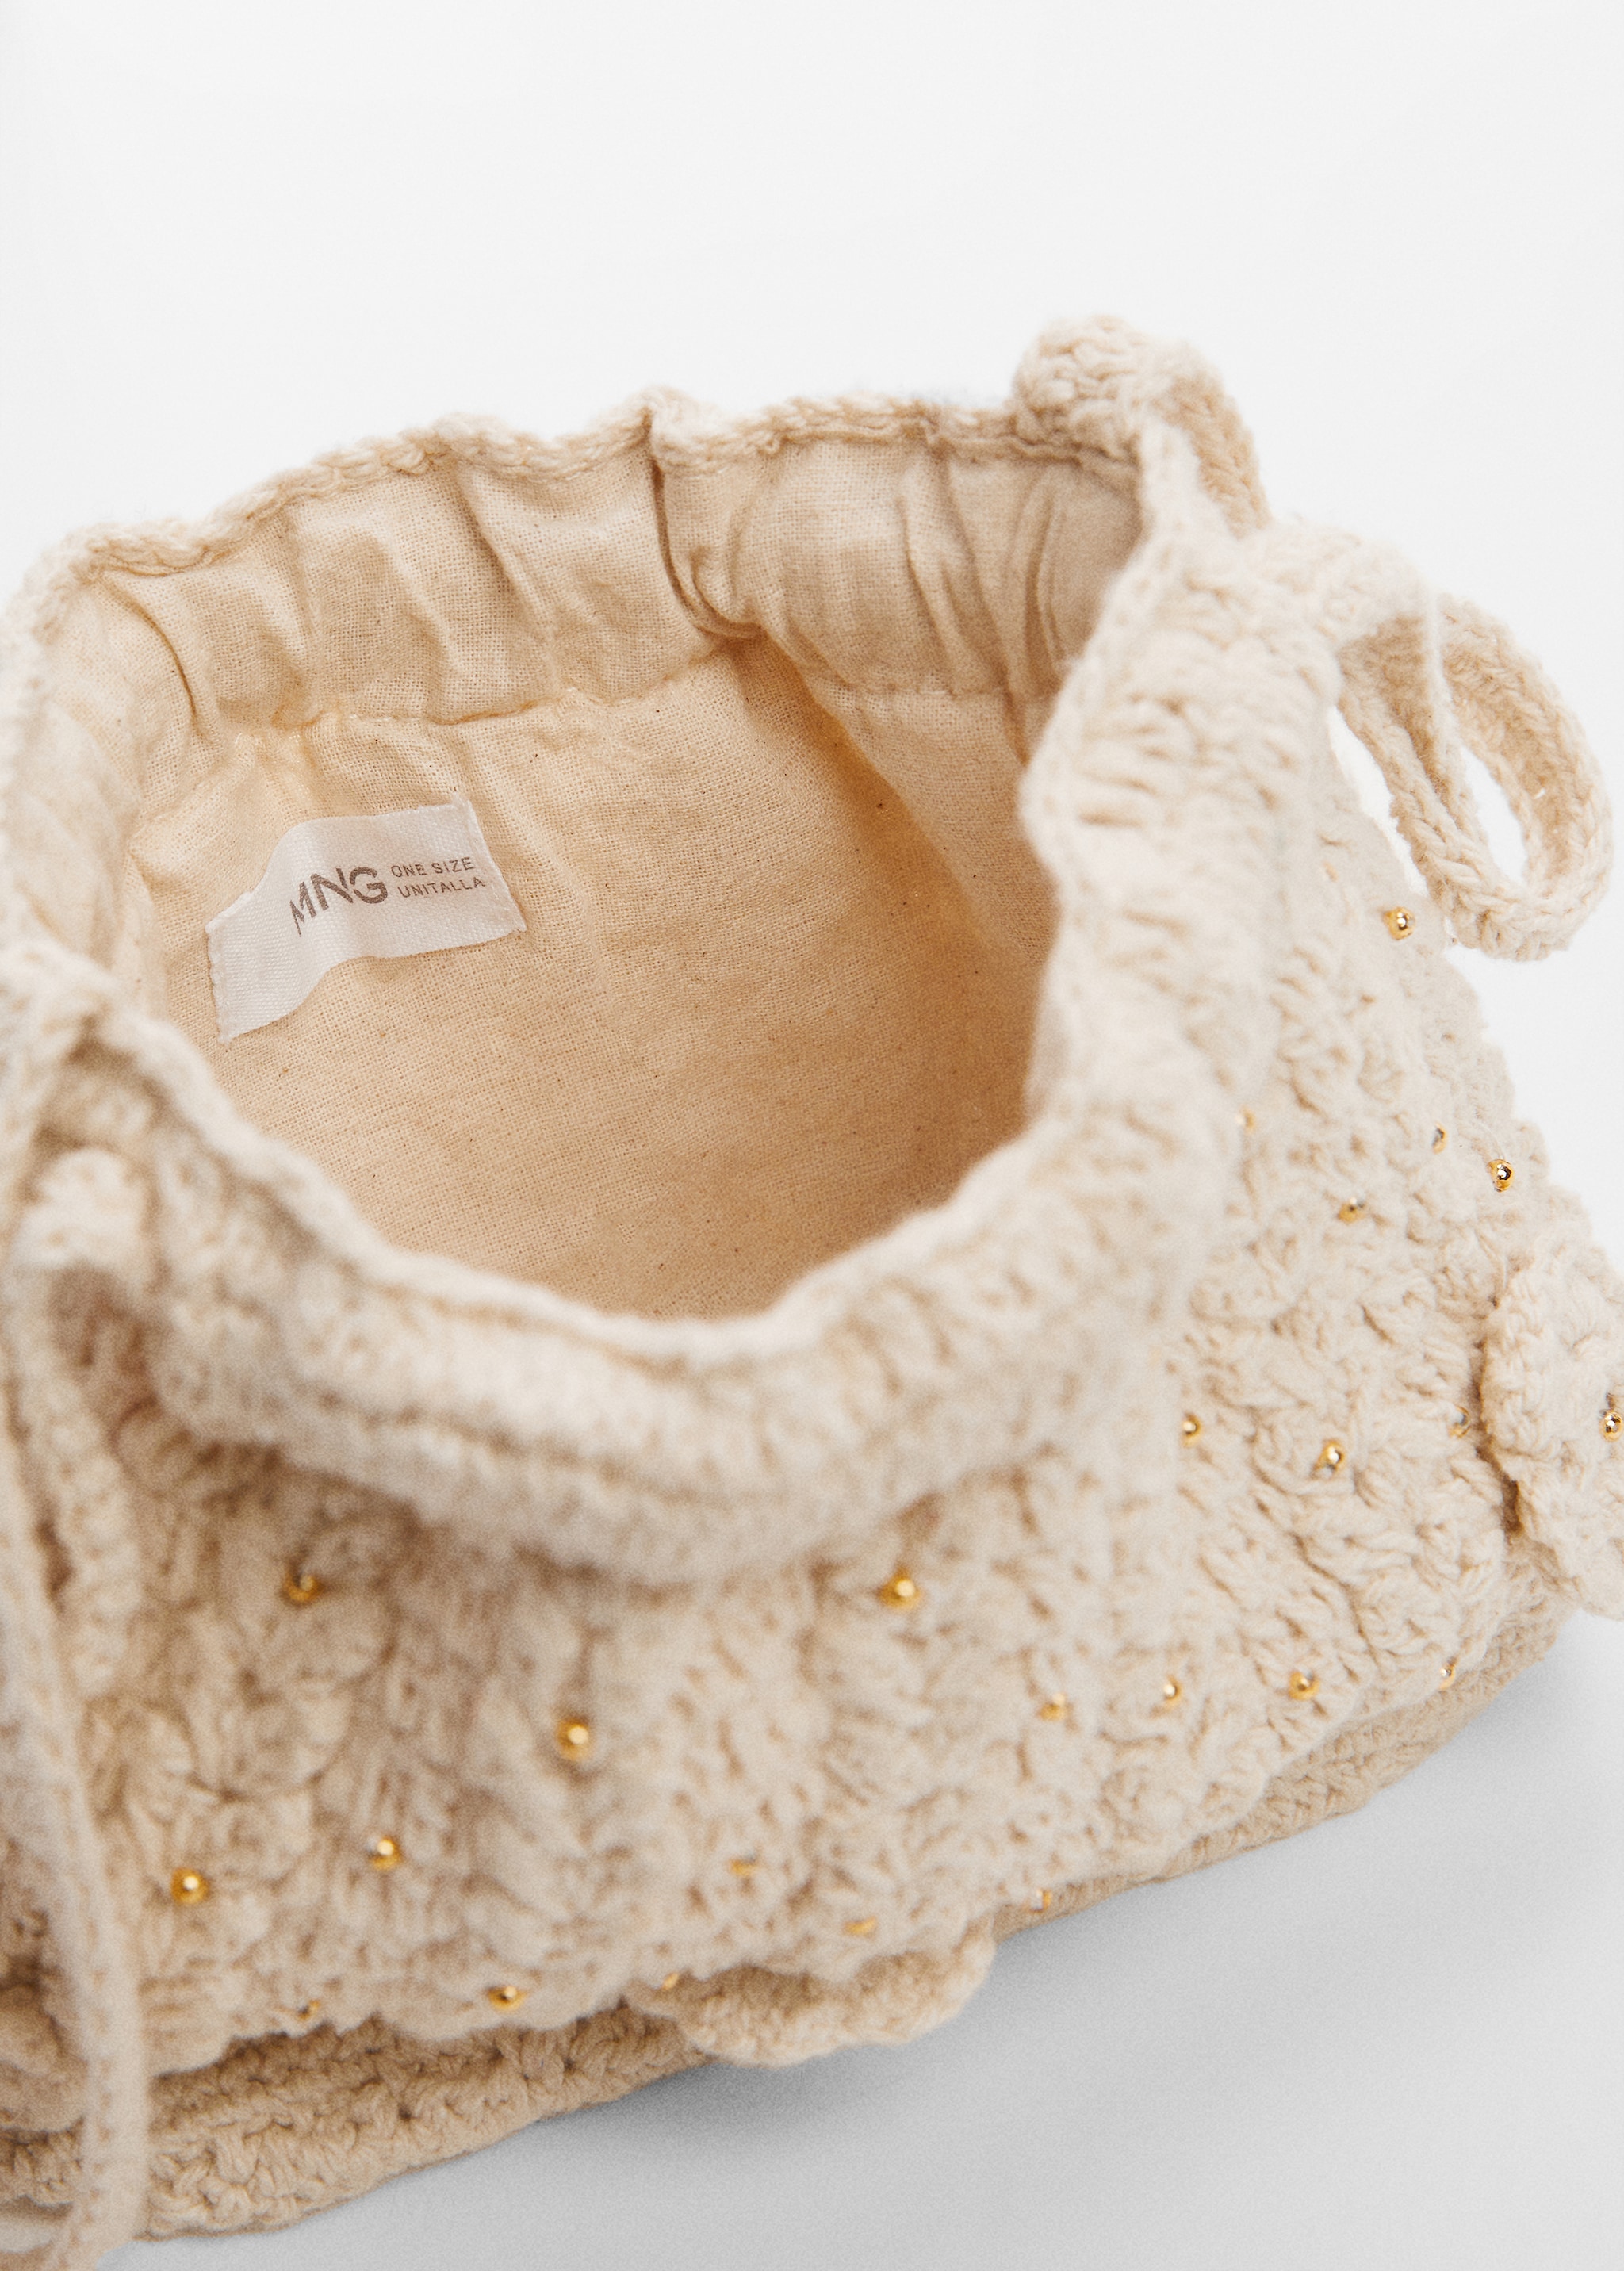 Floral crochet bag - Details of the article 2